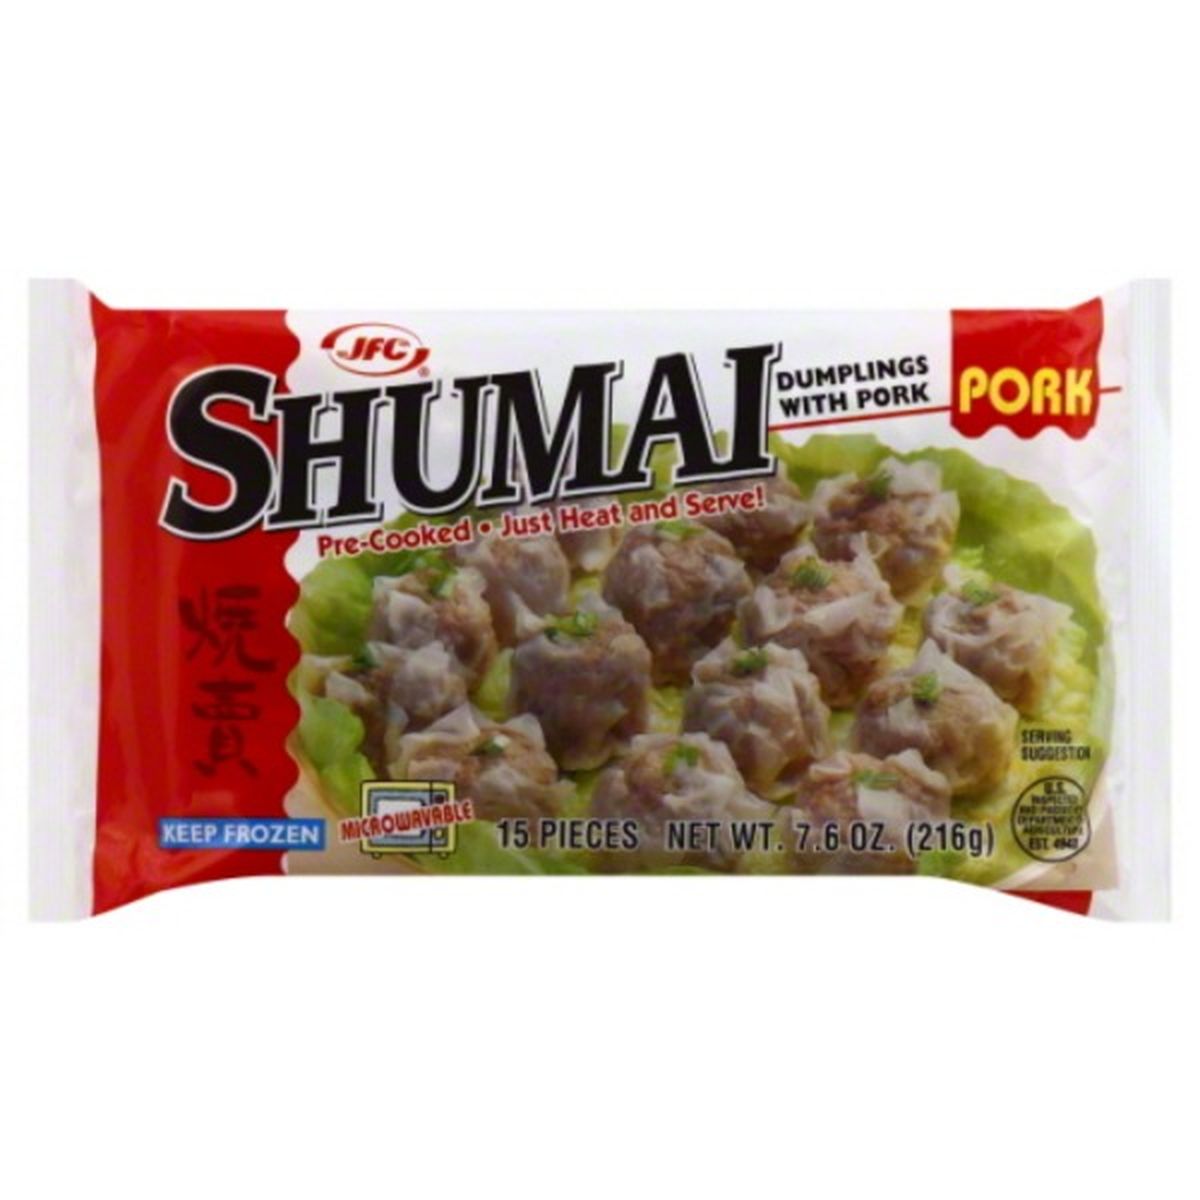 Calories in JFC Shumai, Dumplings with Pork